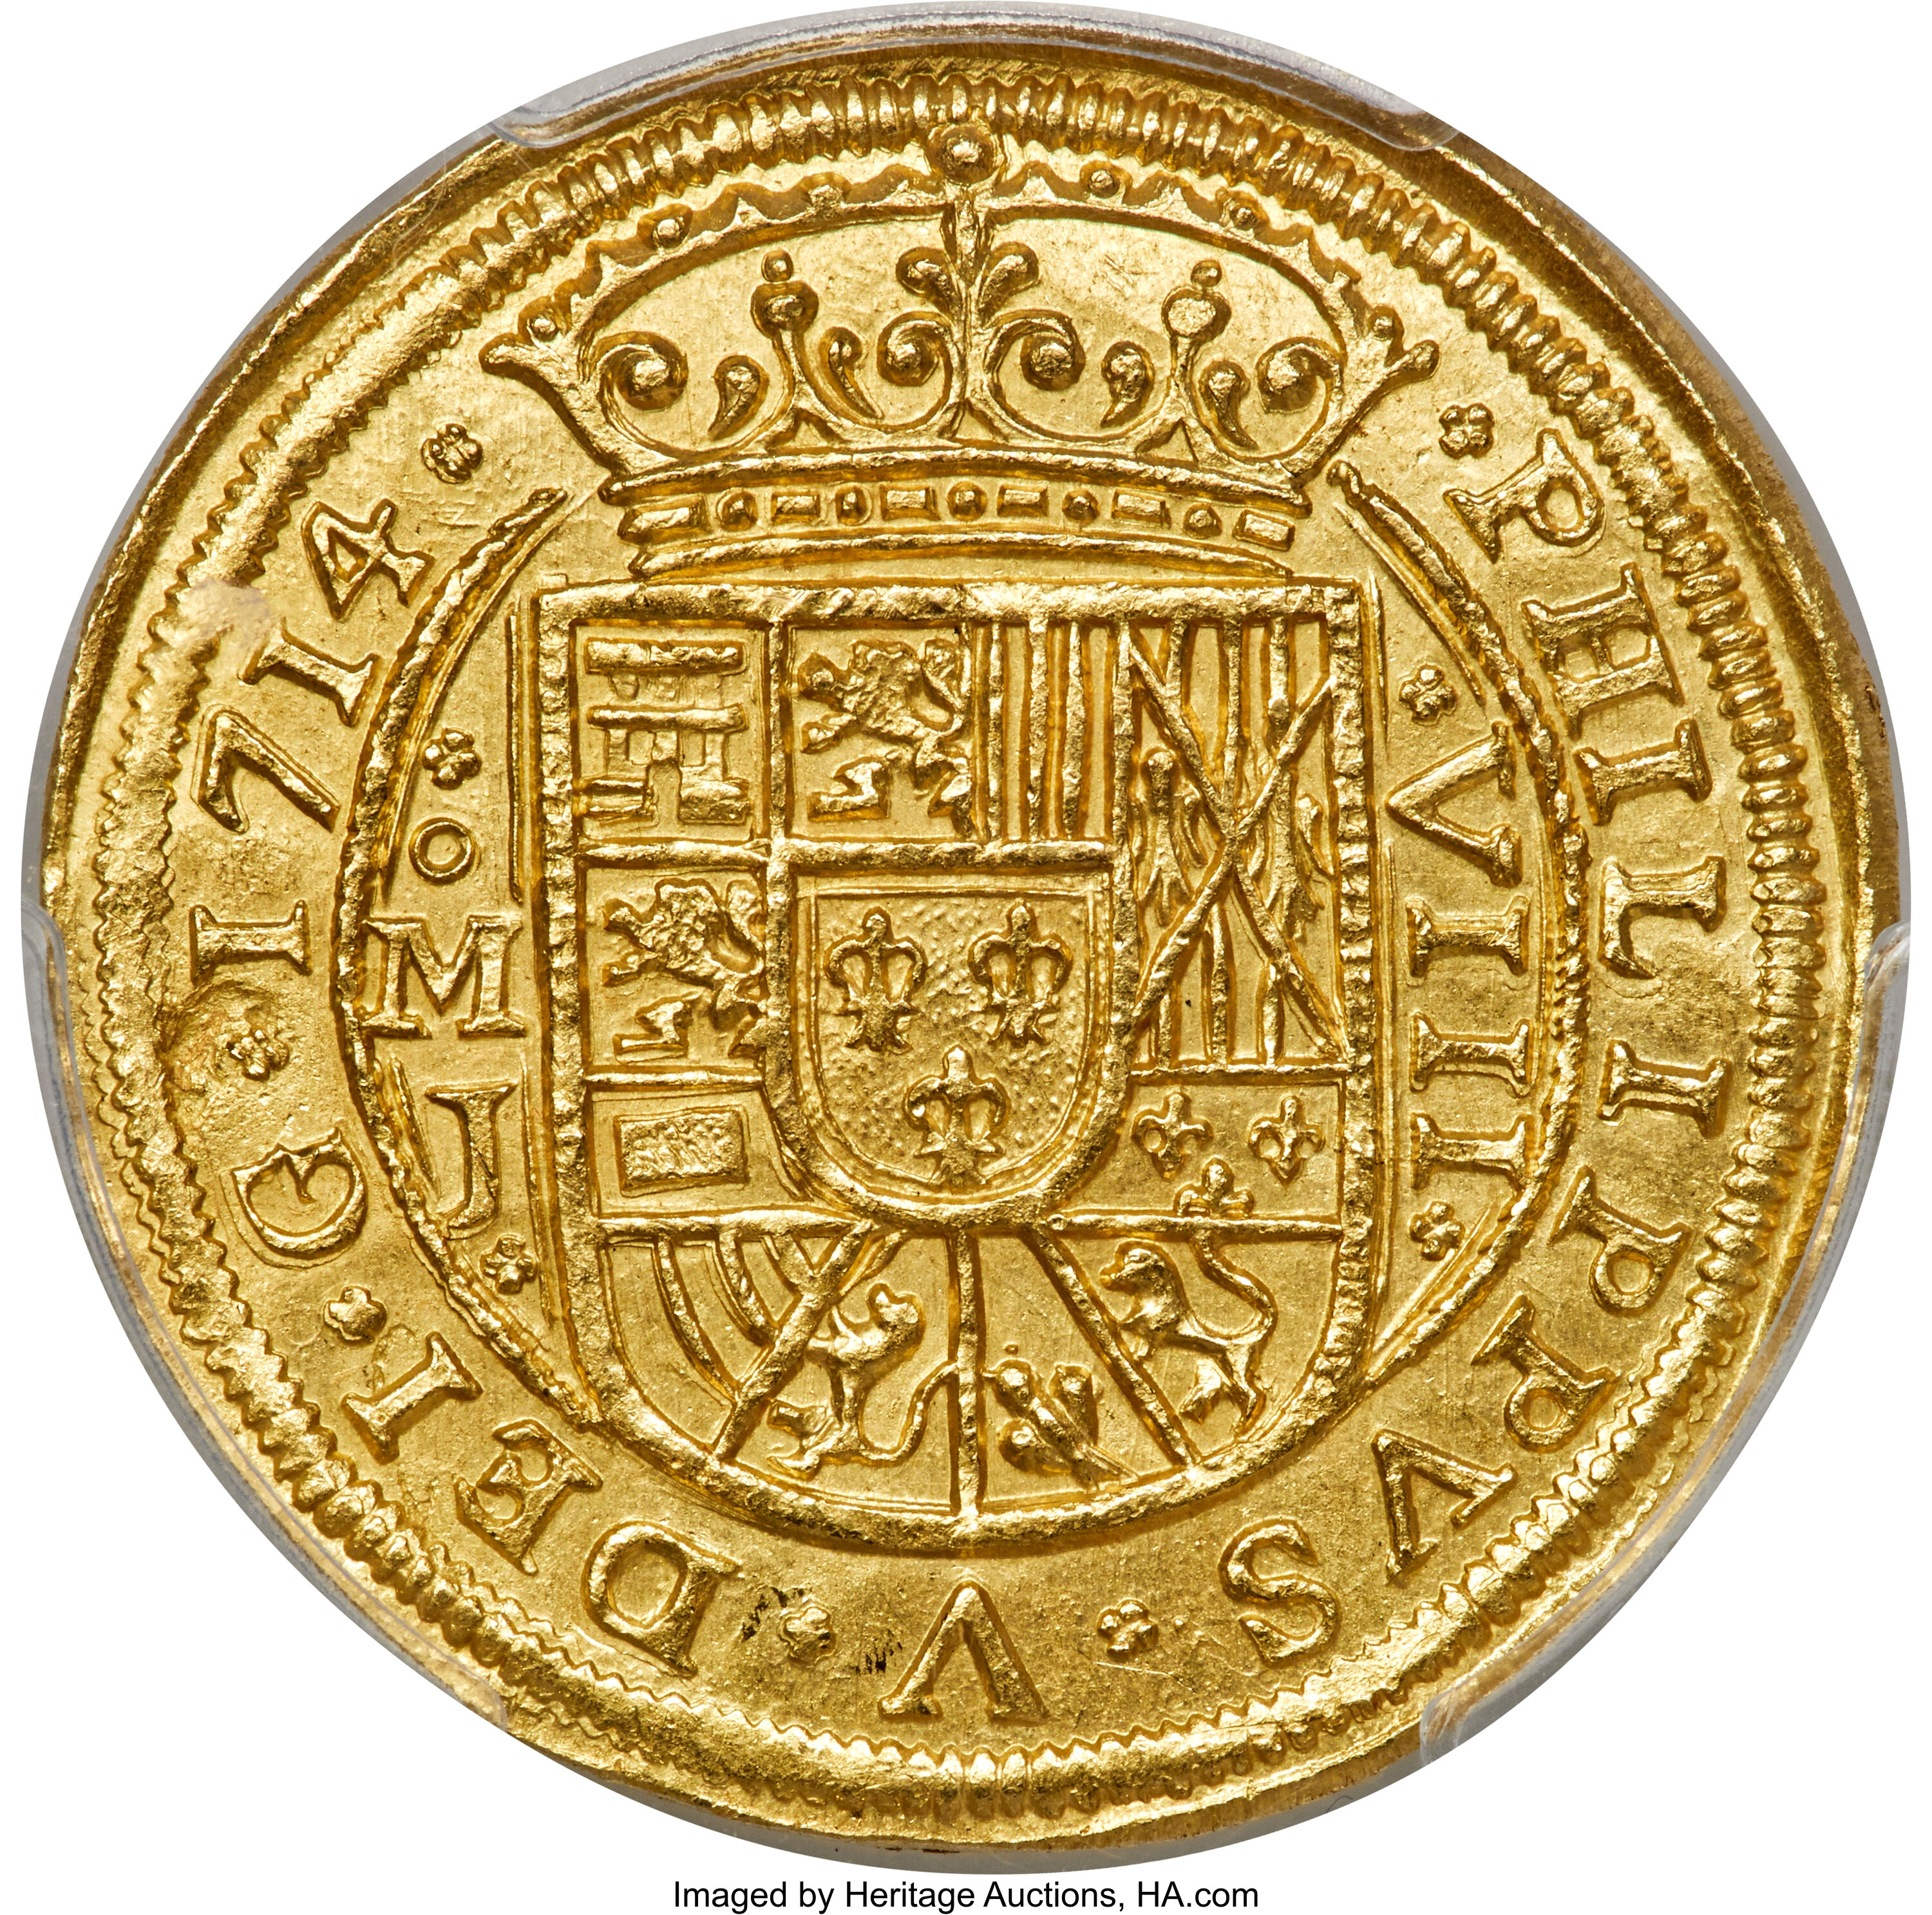 Mexico: Philip V gold 